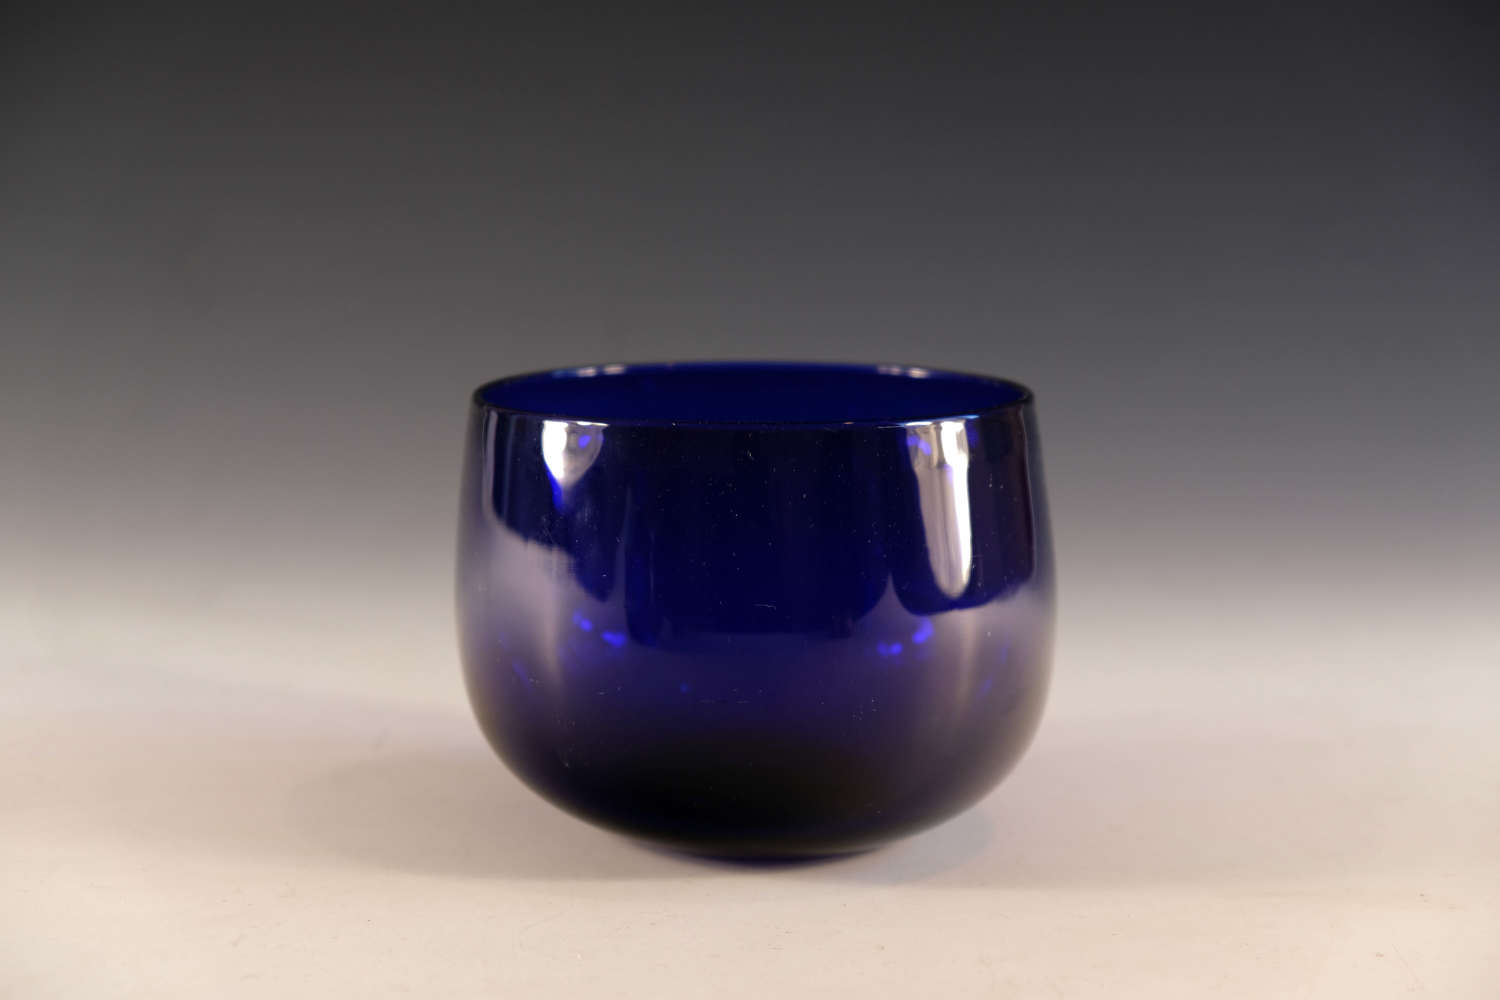 Antique glass - blue finger bowl English c1830